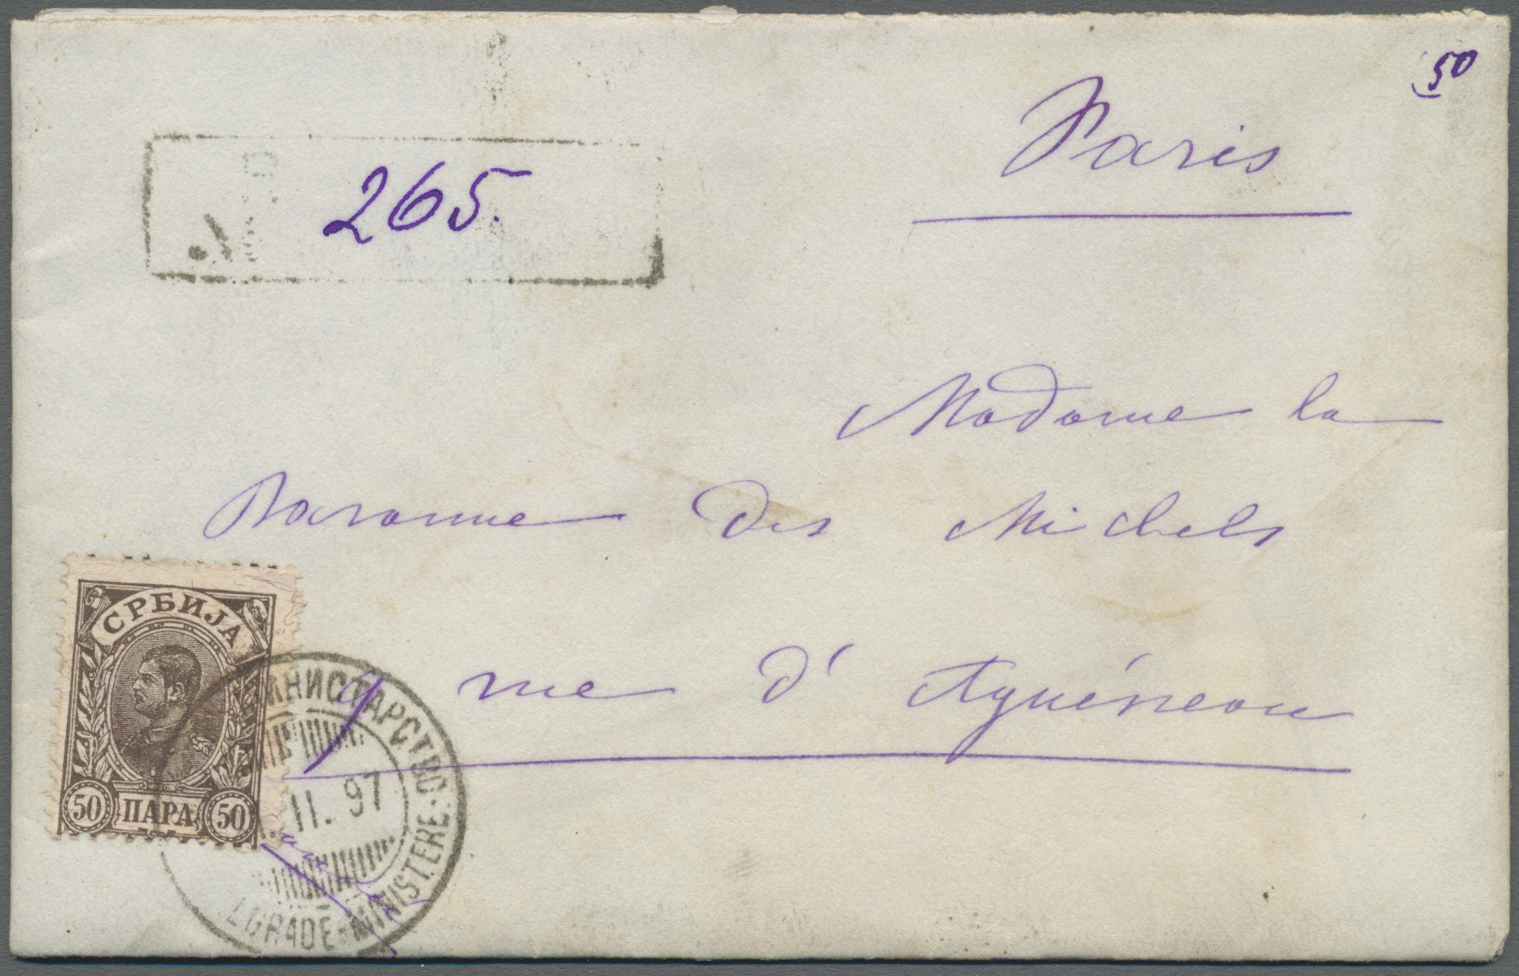 Br Serbien: 1897. Registered Envelope Written From The 'Palais De Belgrade' Addressed To France Bearing Yvert 46, - Serbia